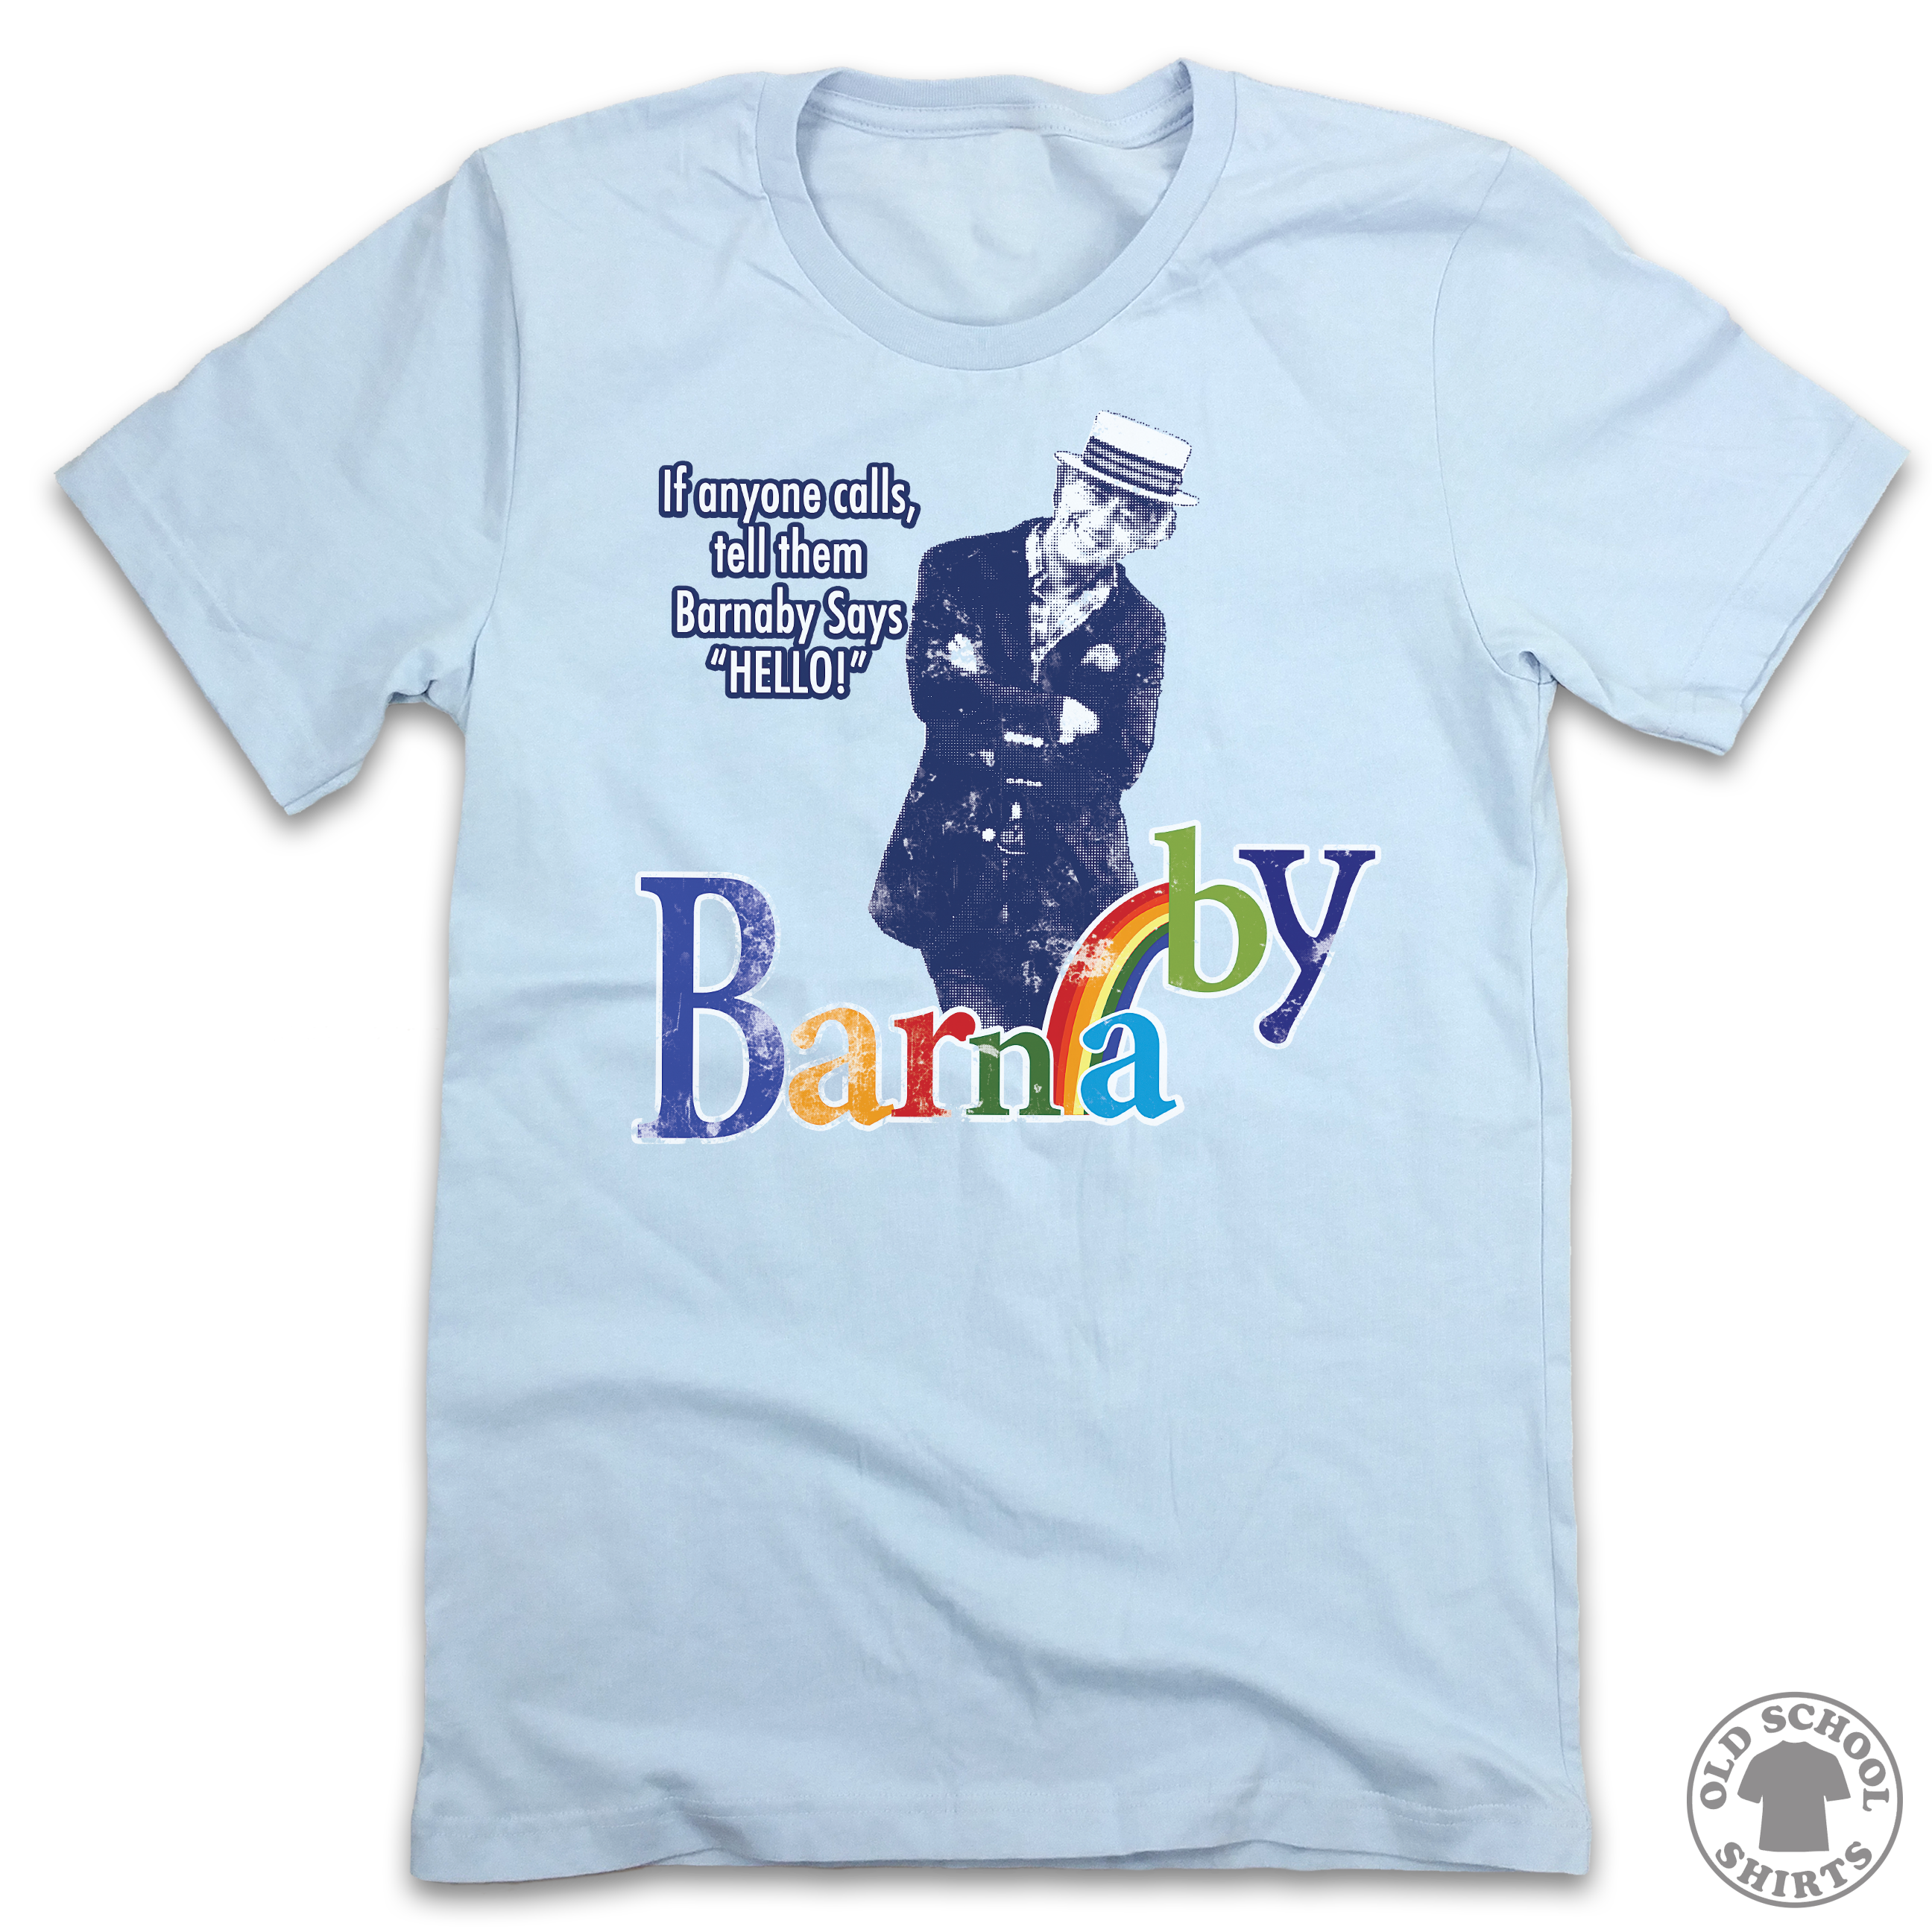 Barnaby - Old School Shirts- Retro Sports T Shirts